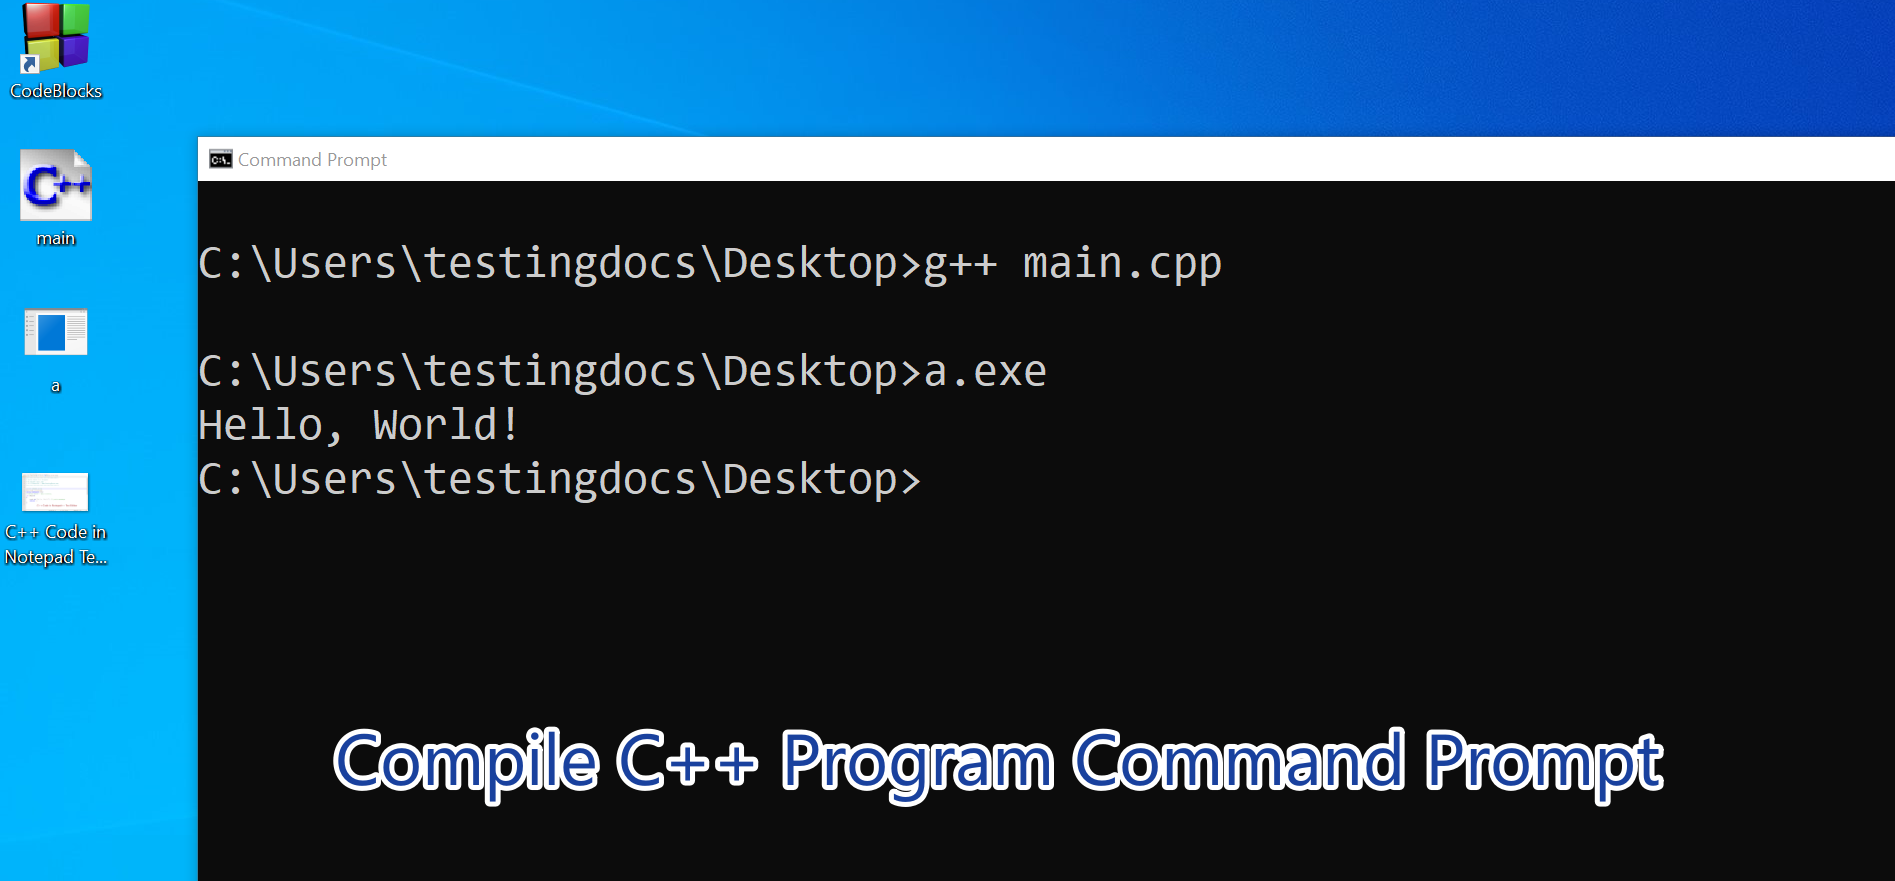 Compile C++ Program Command Prompt